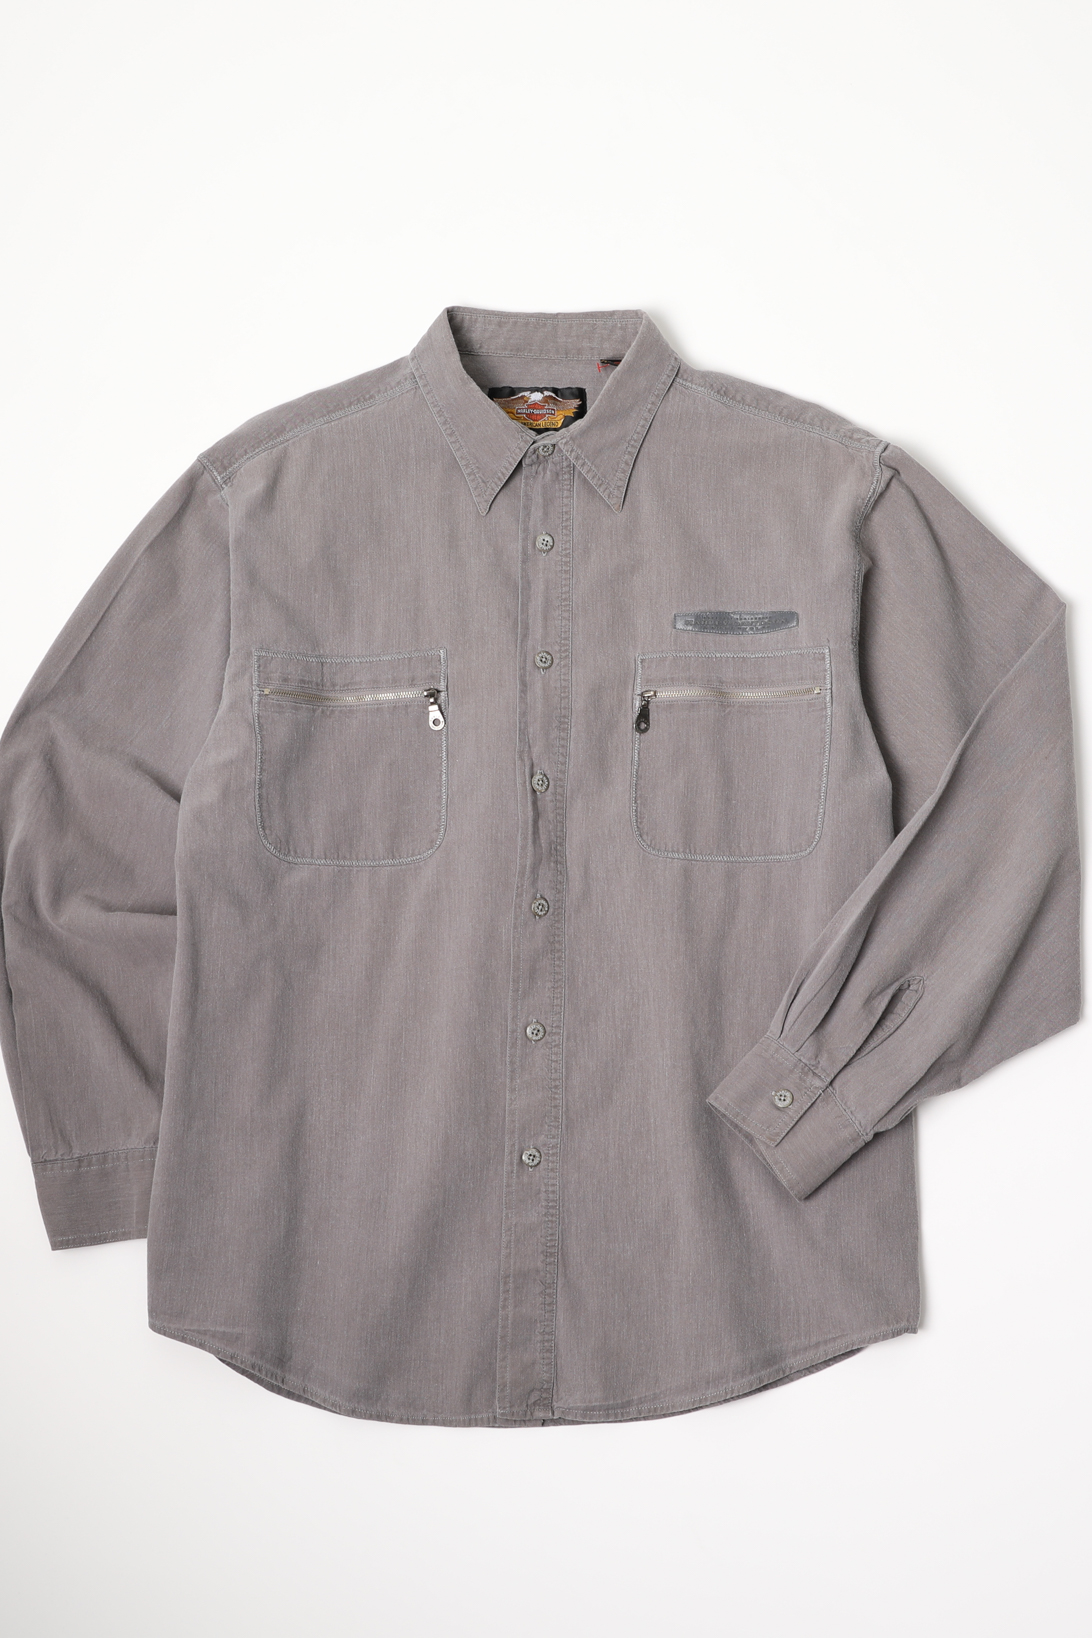 [XL] 할리 데이비슨 셔츠 (H550)